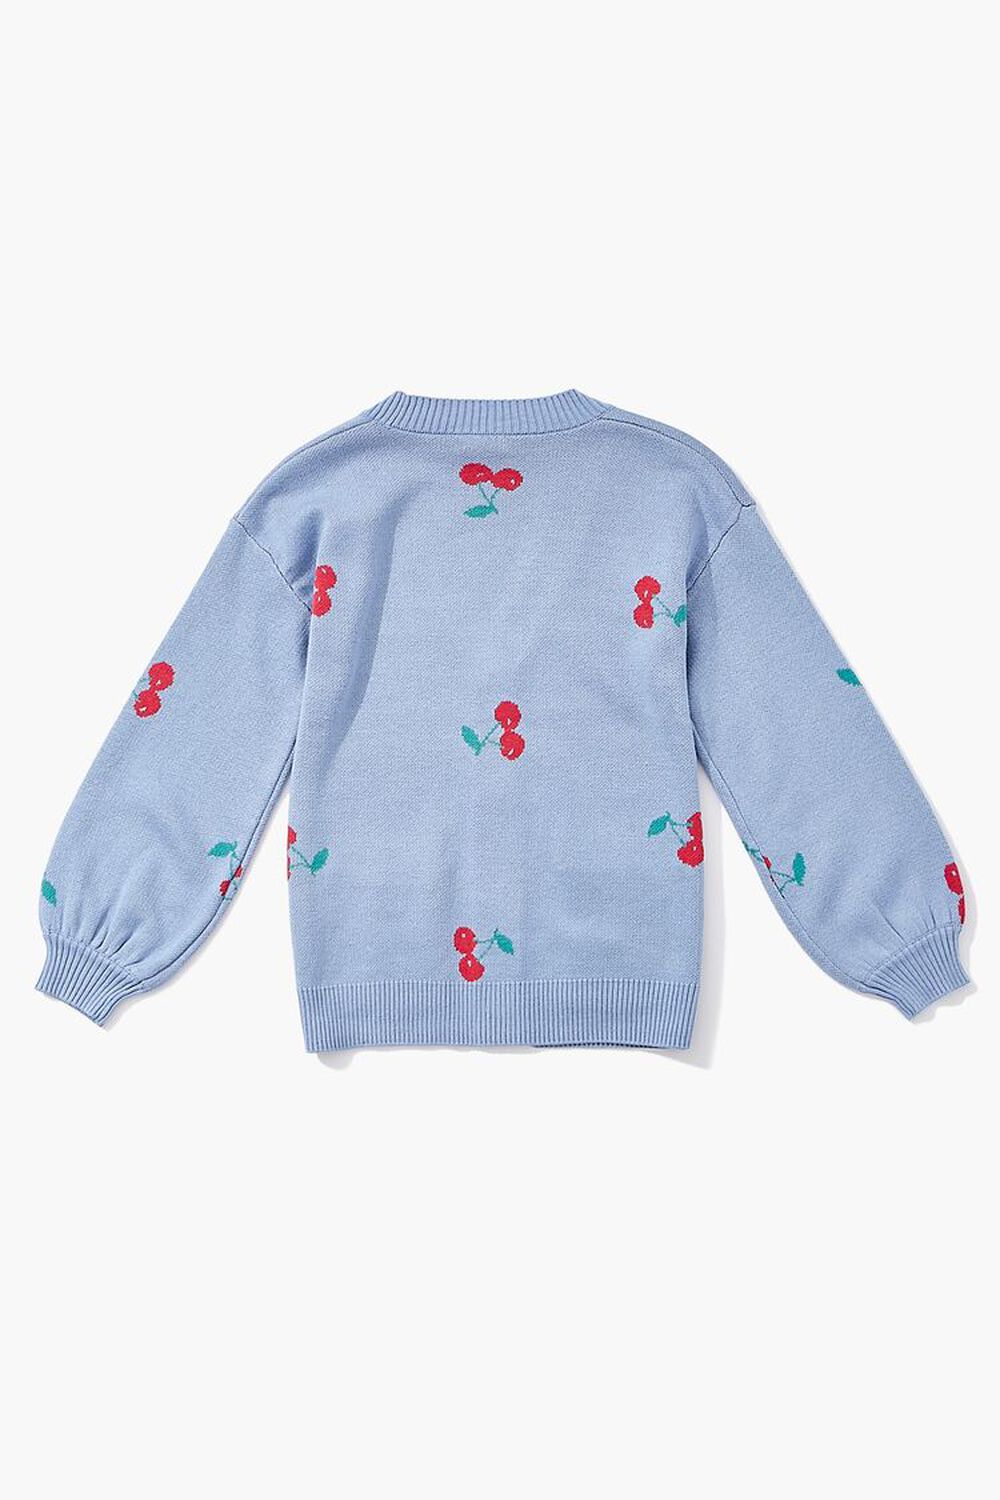 BLUE/MULTI Girls Cherry Cardigan Sweater (Kids), image 2